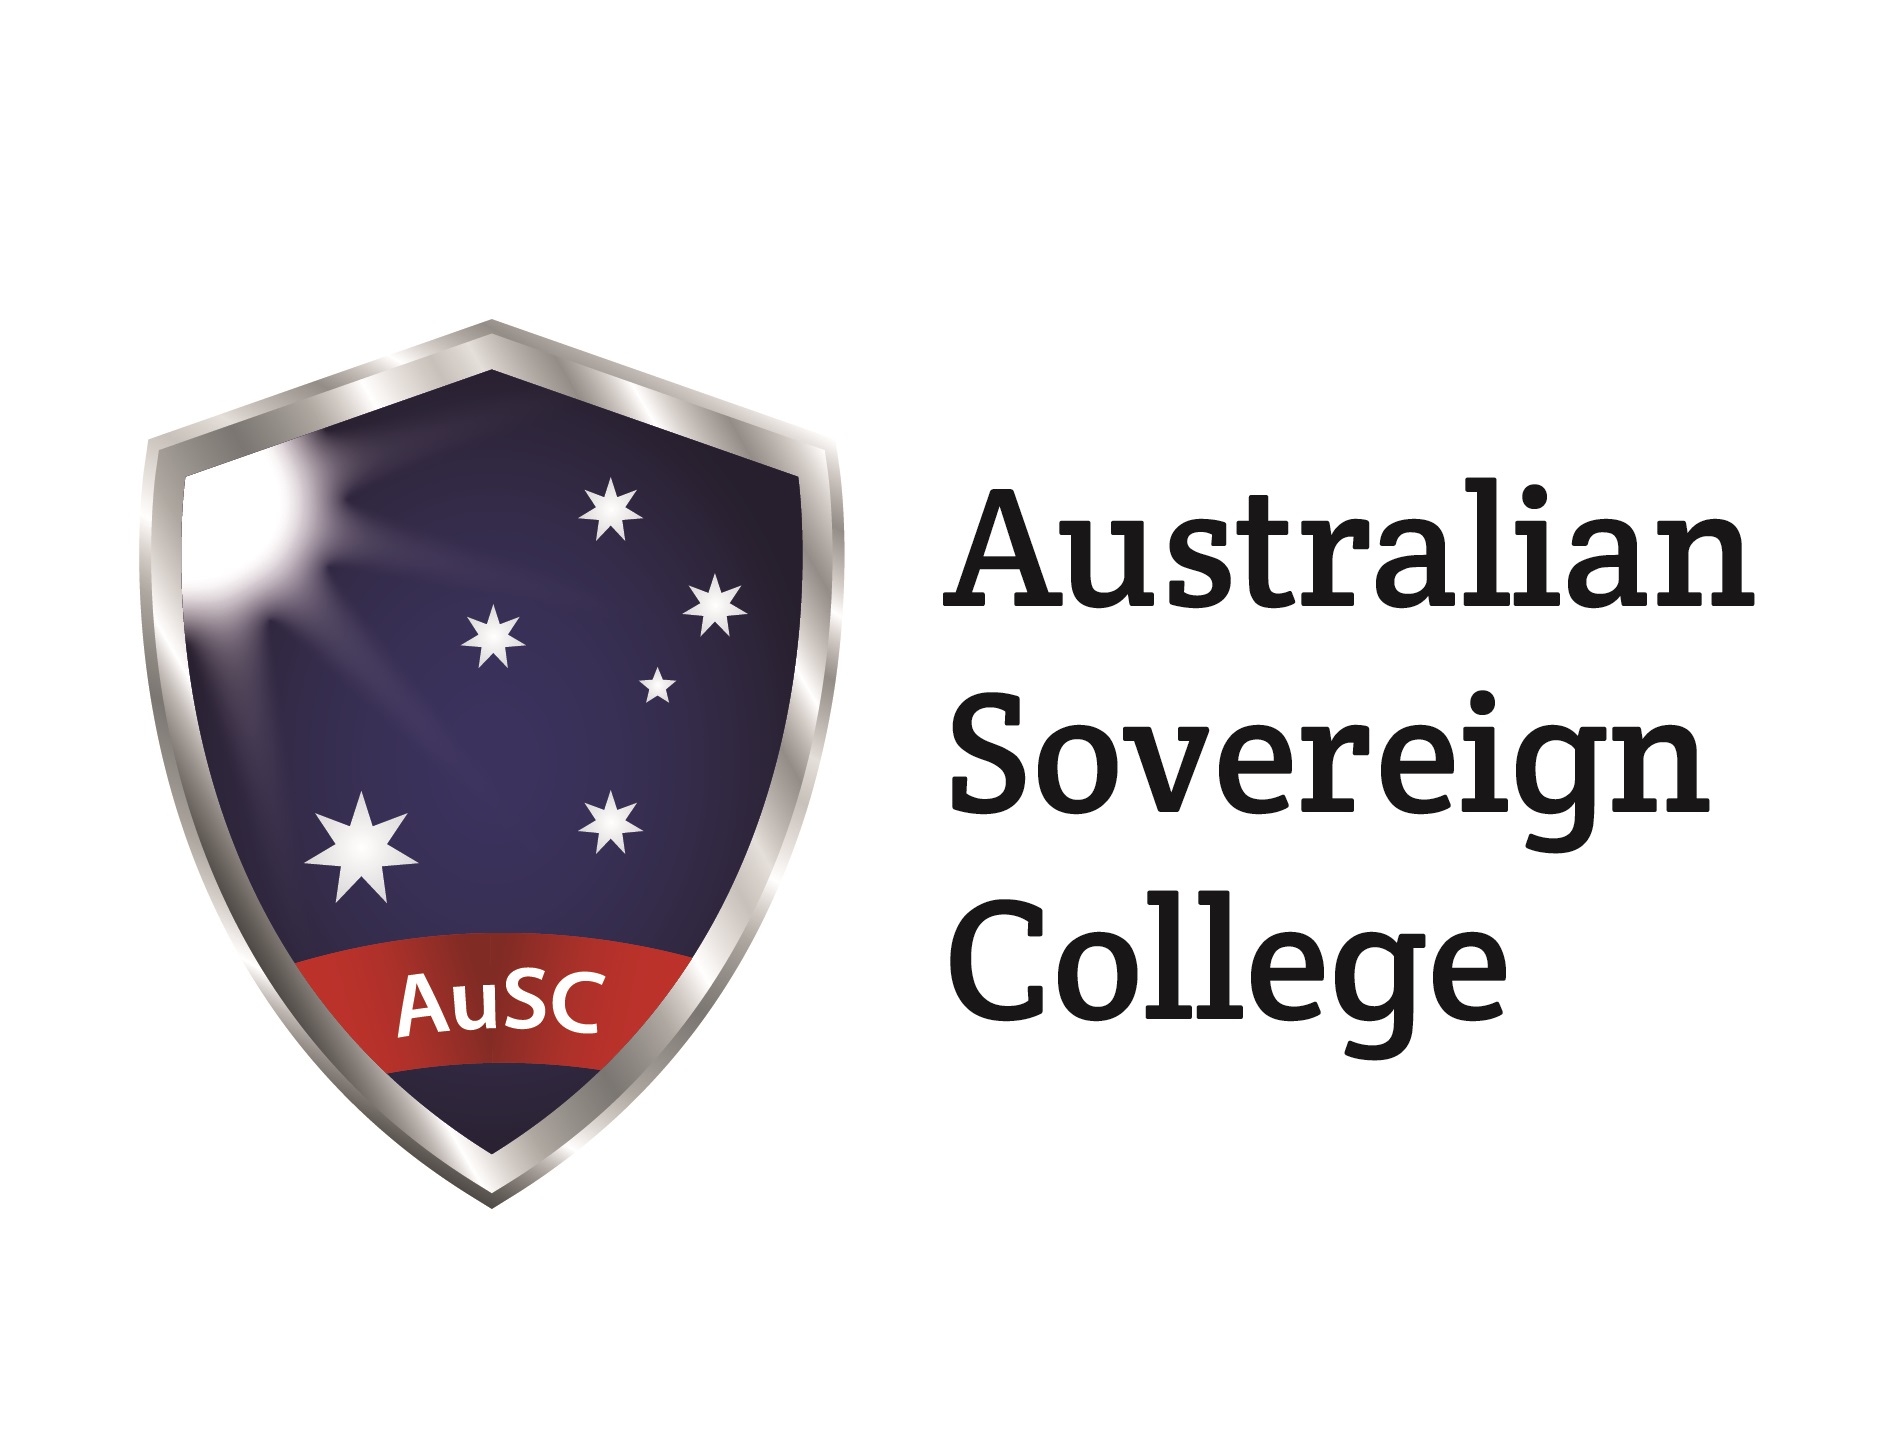 Australian Sovereign College (AUSC)